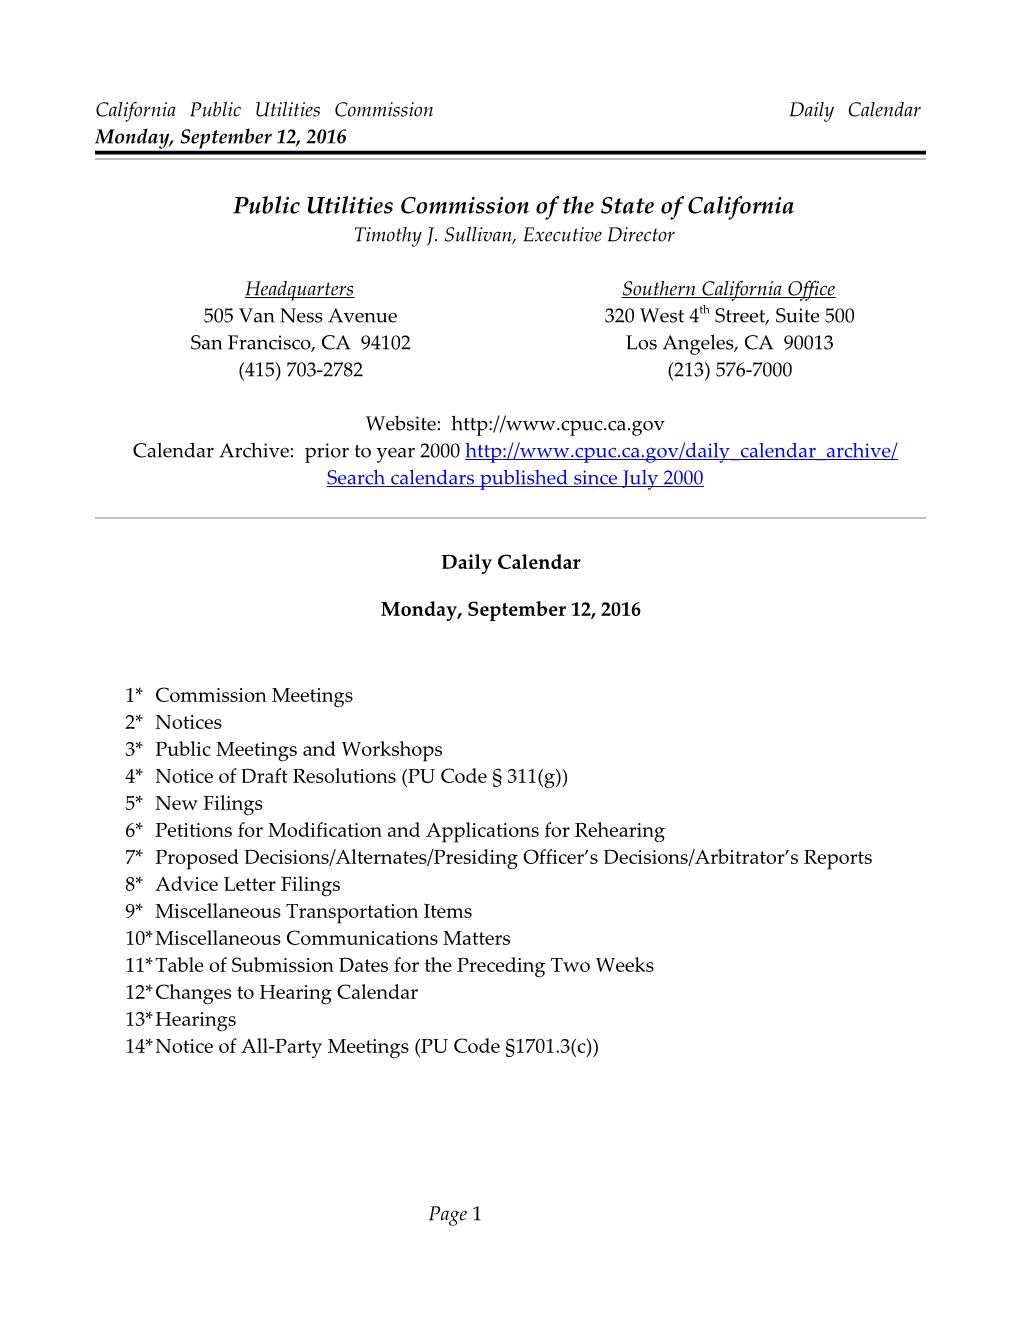 California Public Utilities Commission Daily Calendar Monday, September 12, 2016